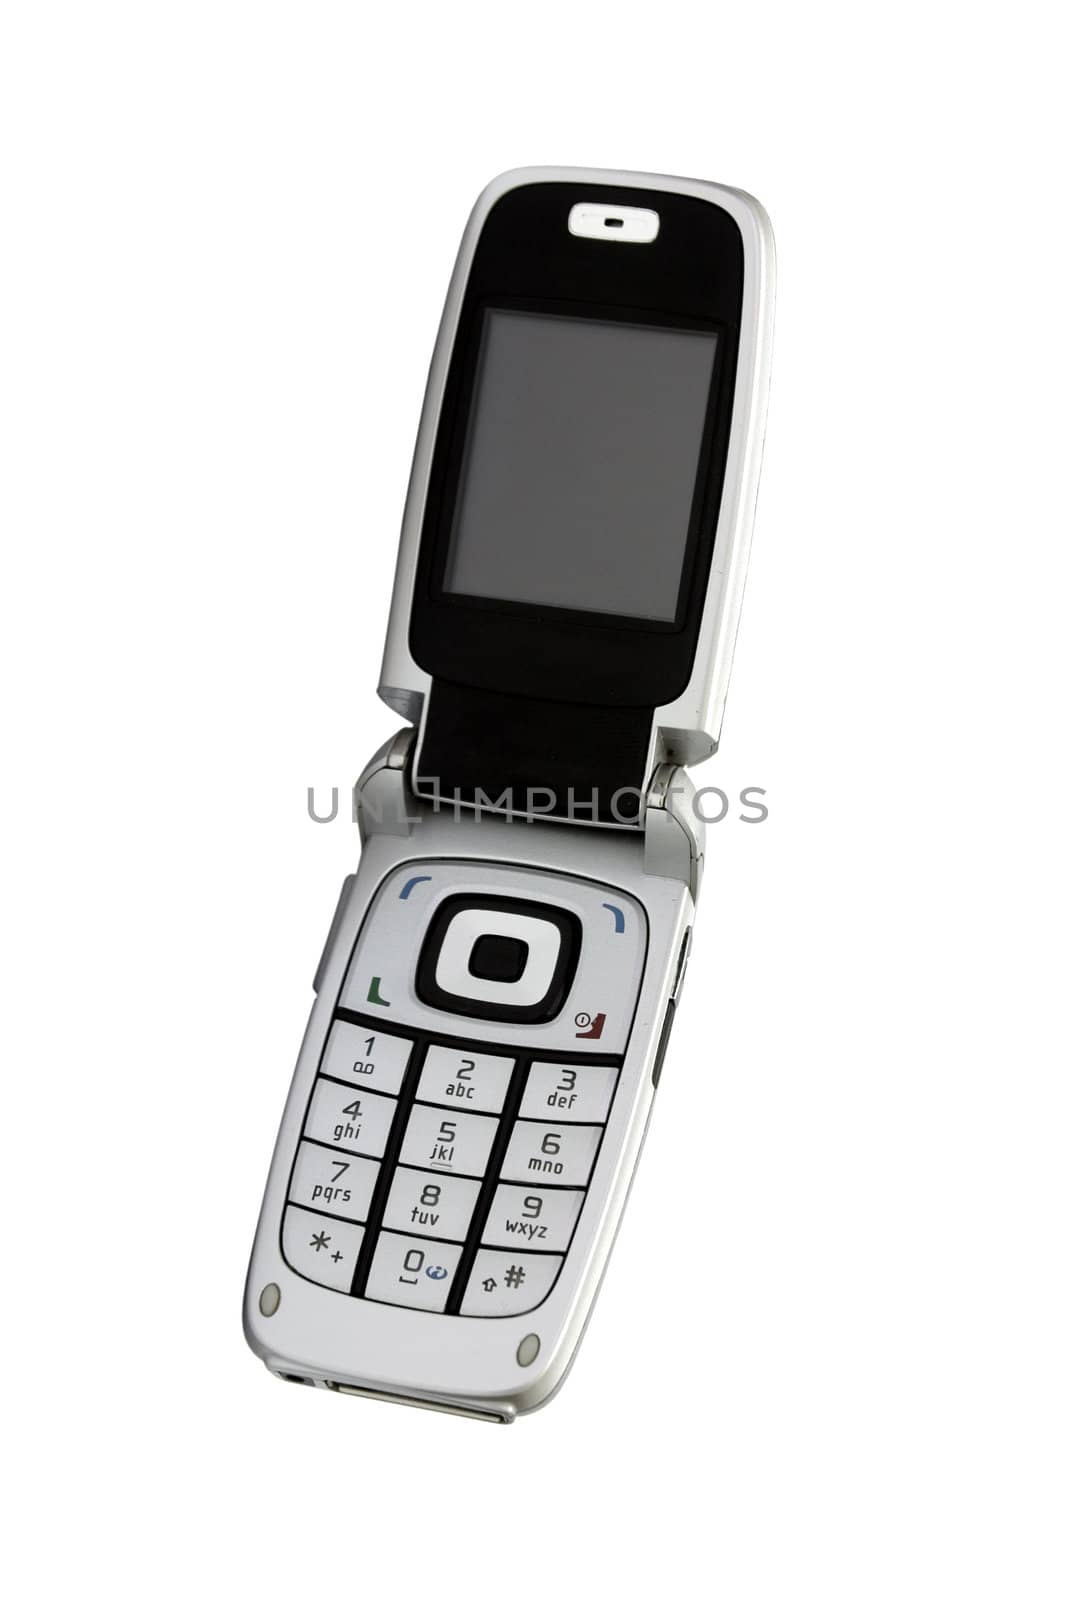 cellular phone by draskovic